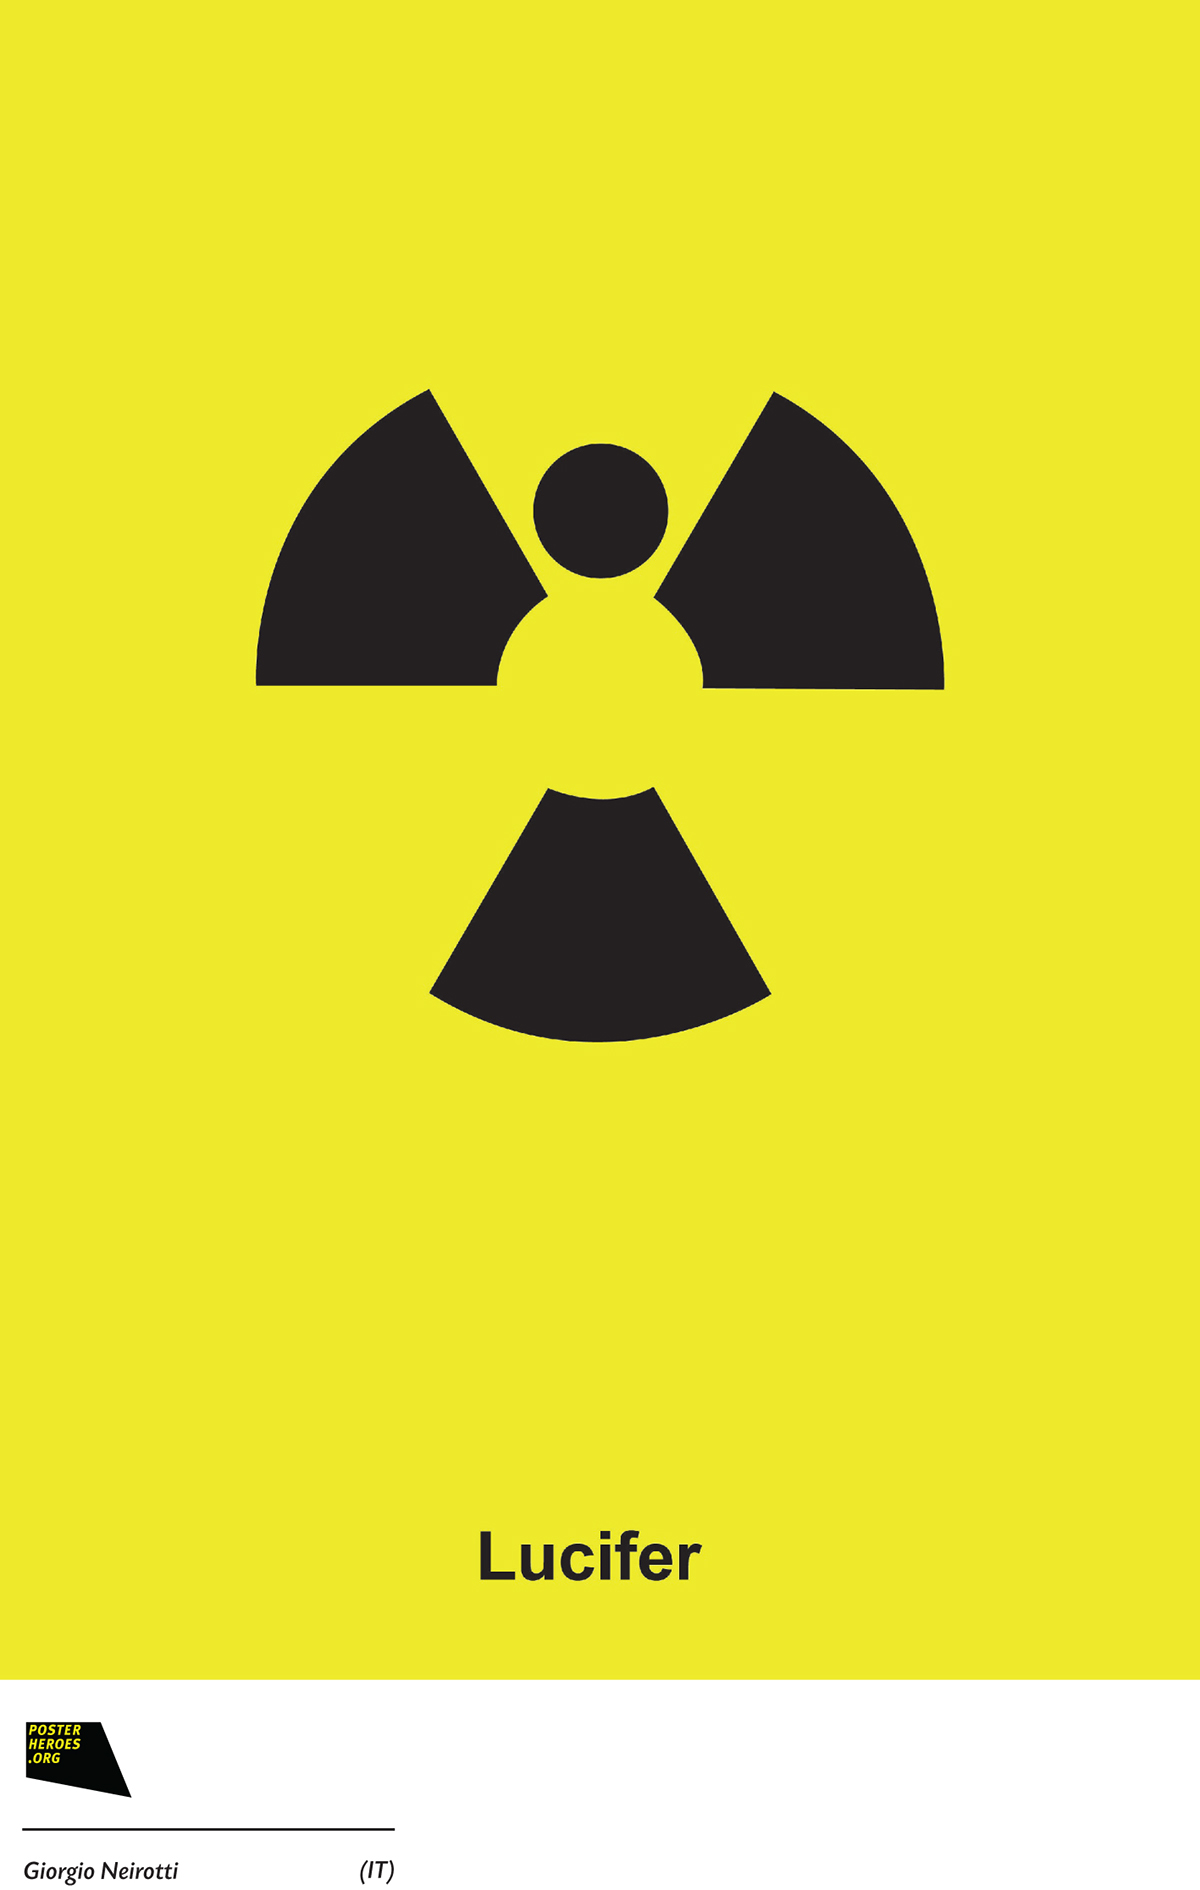 heroes Nature nuclear future poster green energies posterheroes print